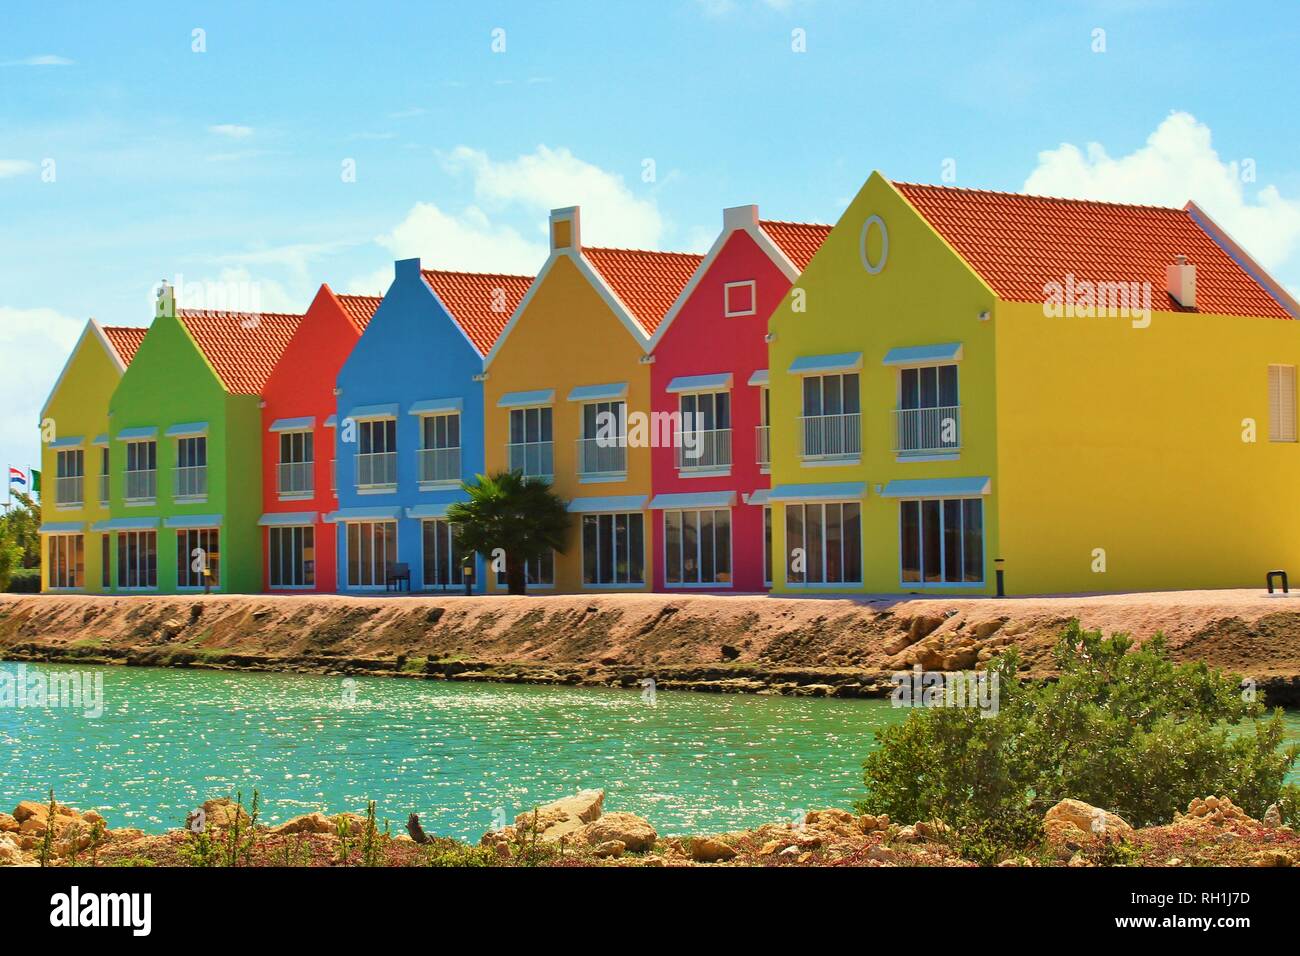 Kralendijk, Bonaire, Karibik - 22. Februar 2018: Die farbenfrohen, neu erbaute Courtyard Village Tourist Unterkunft komplex. Stockfoto